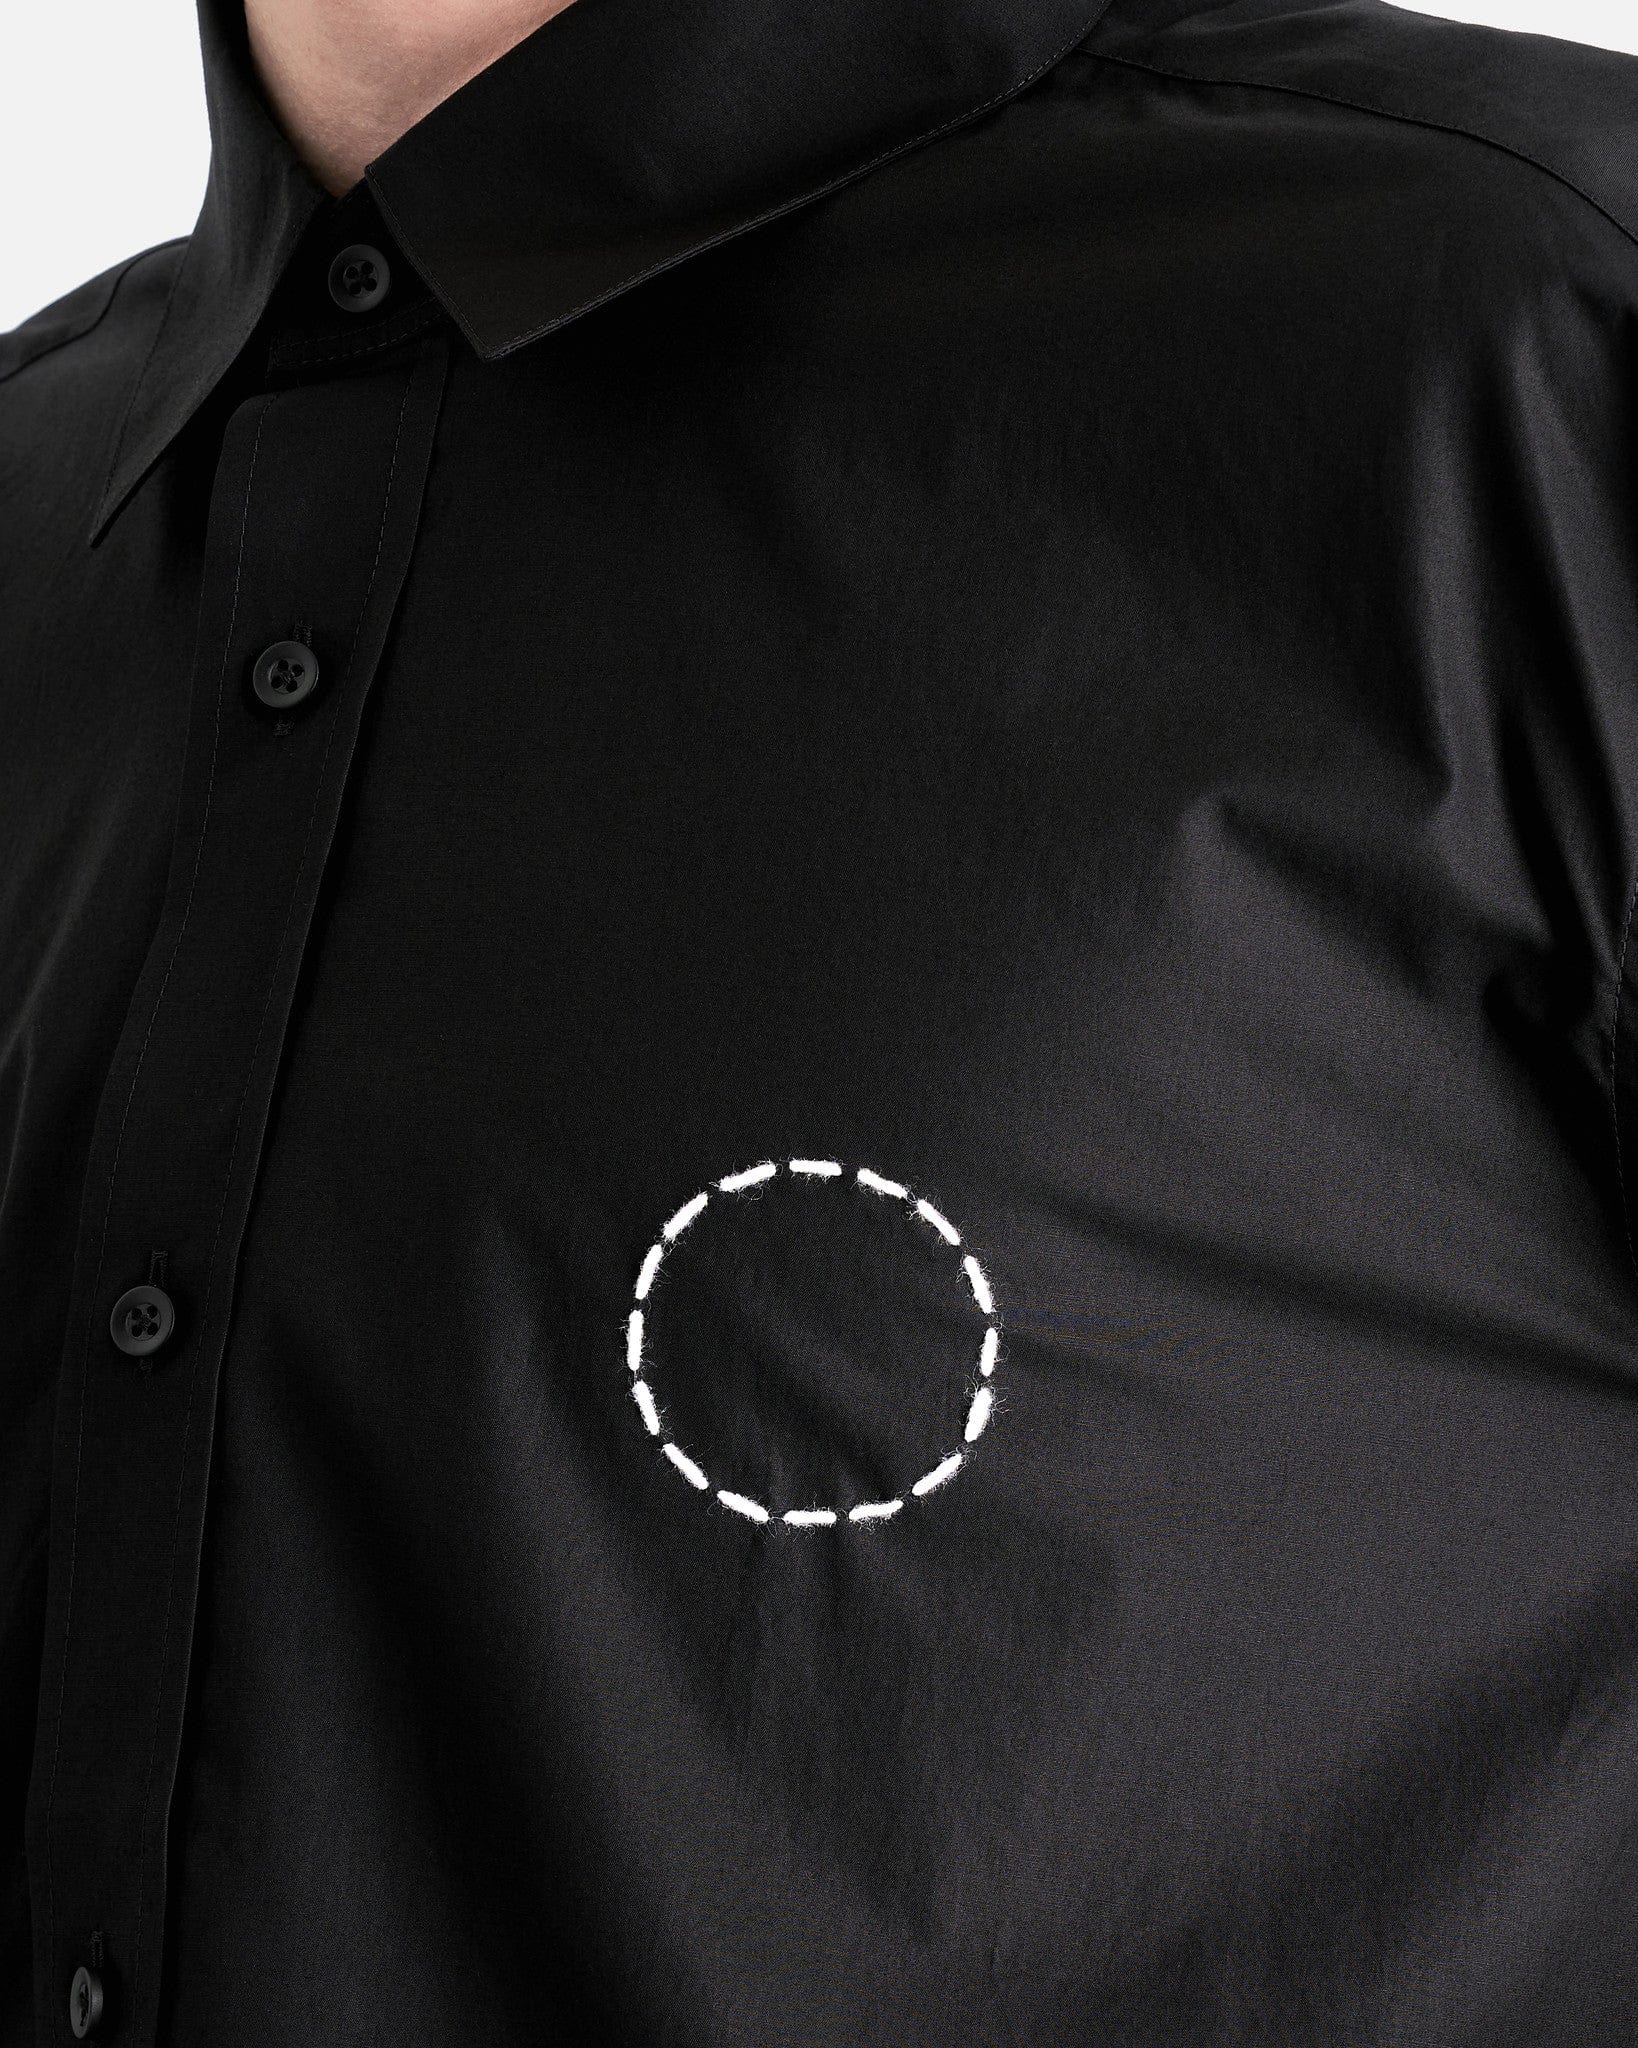 Craig Green Men's Shirts Circle Shirt in Black